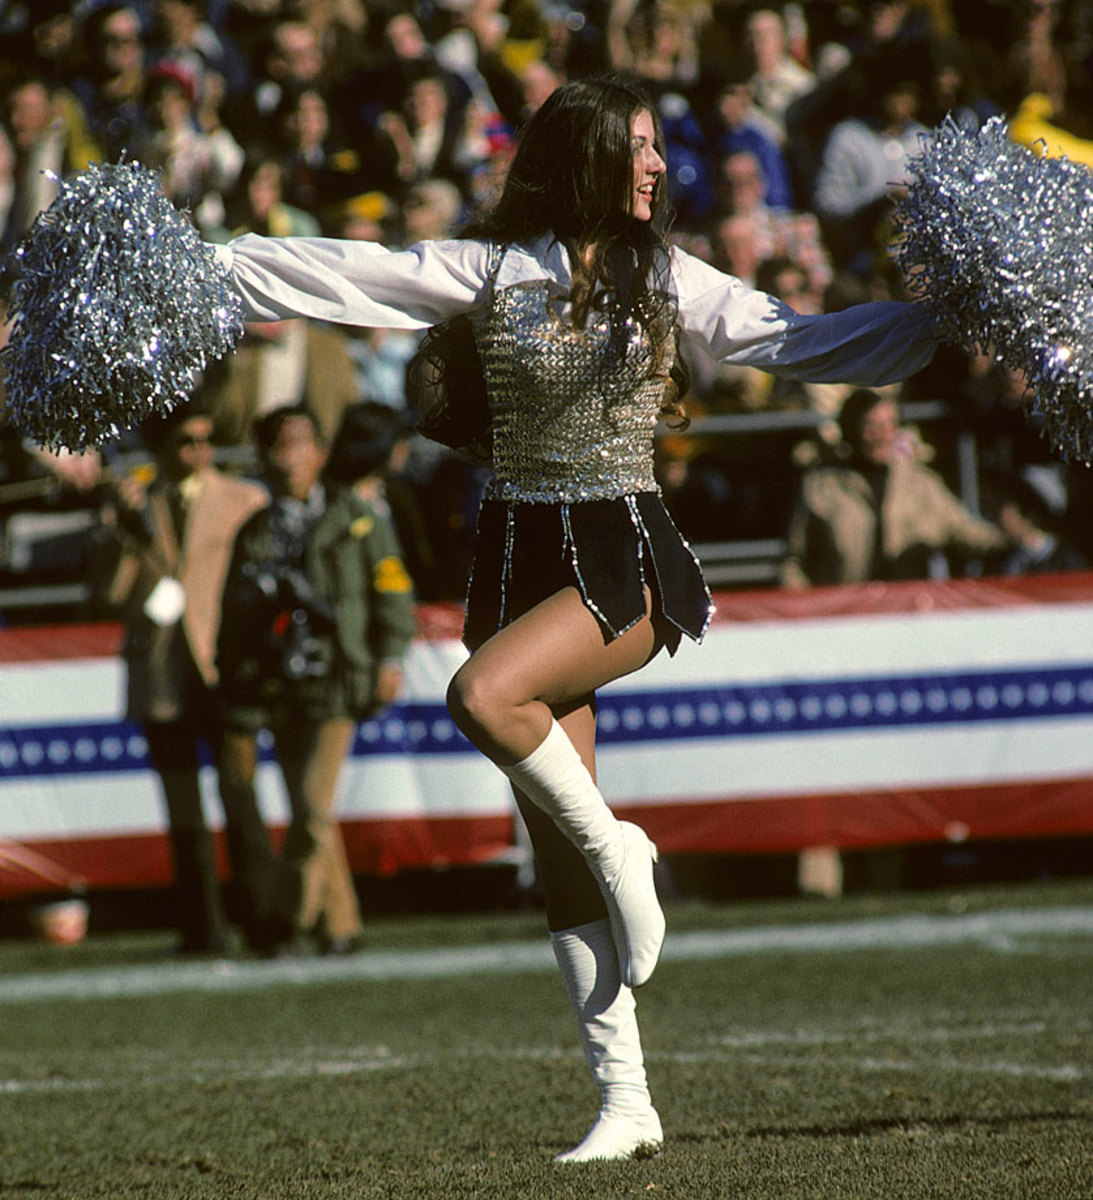 1975-Super-Bowl-IX-Oakland-Raiders-cheerleader.jpg